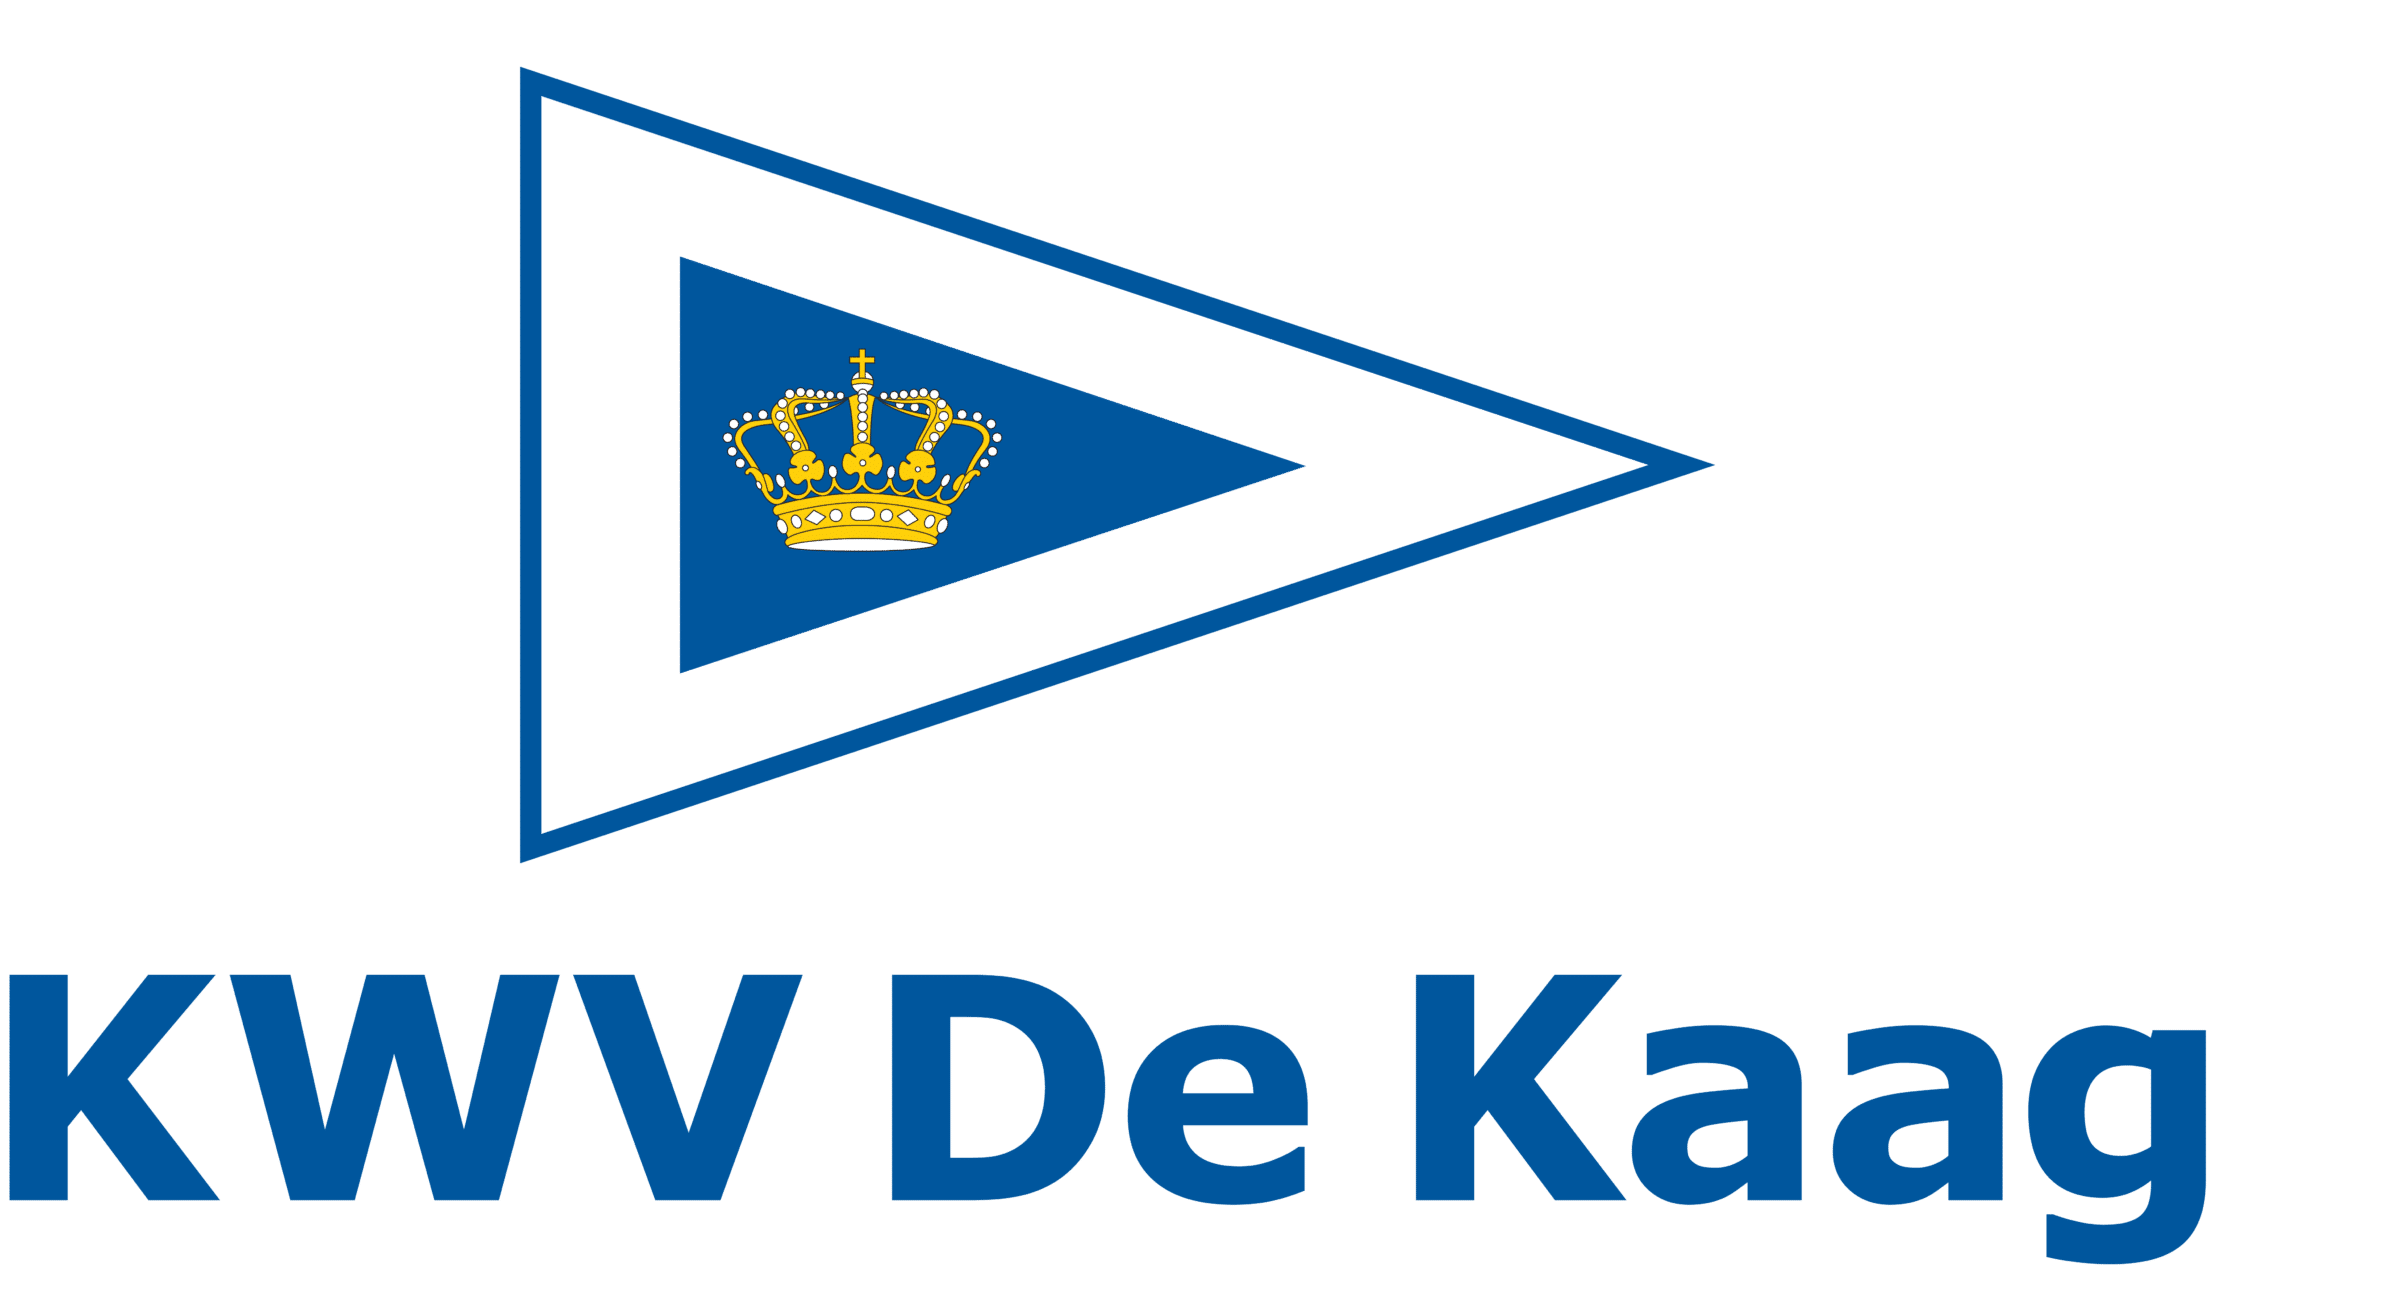 KWV De Kaag logo staand